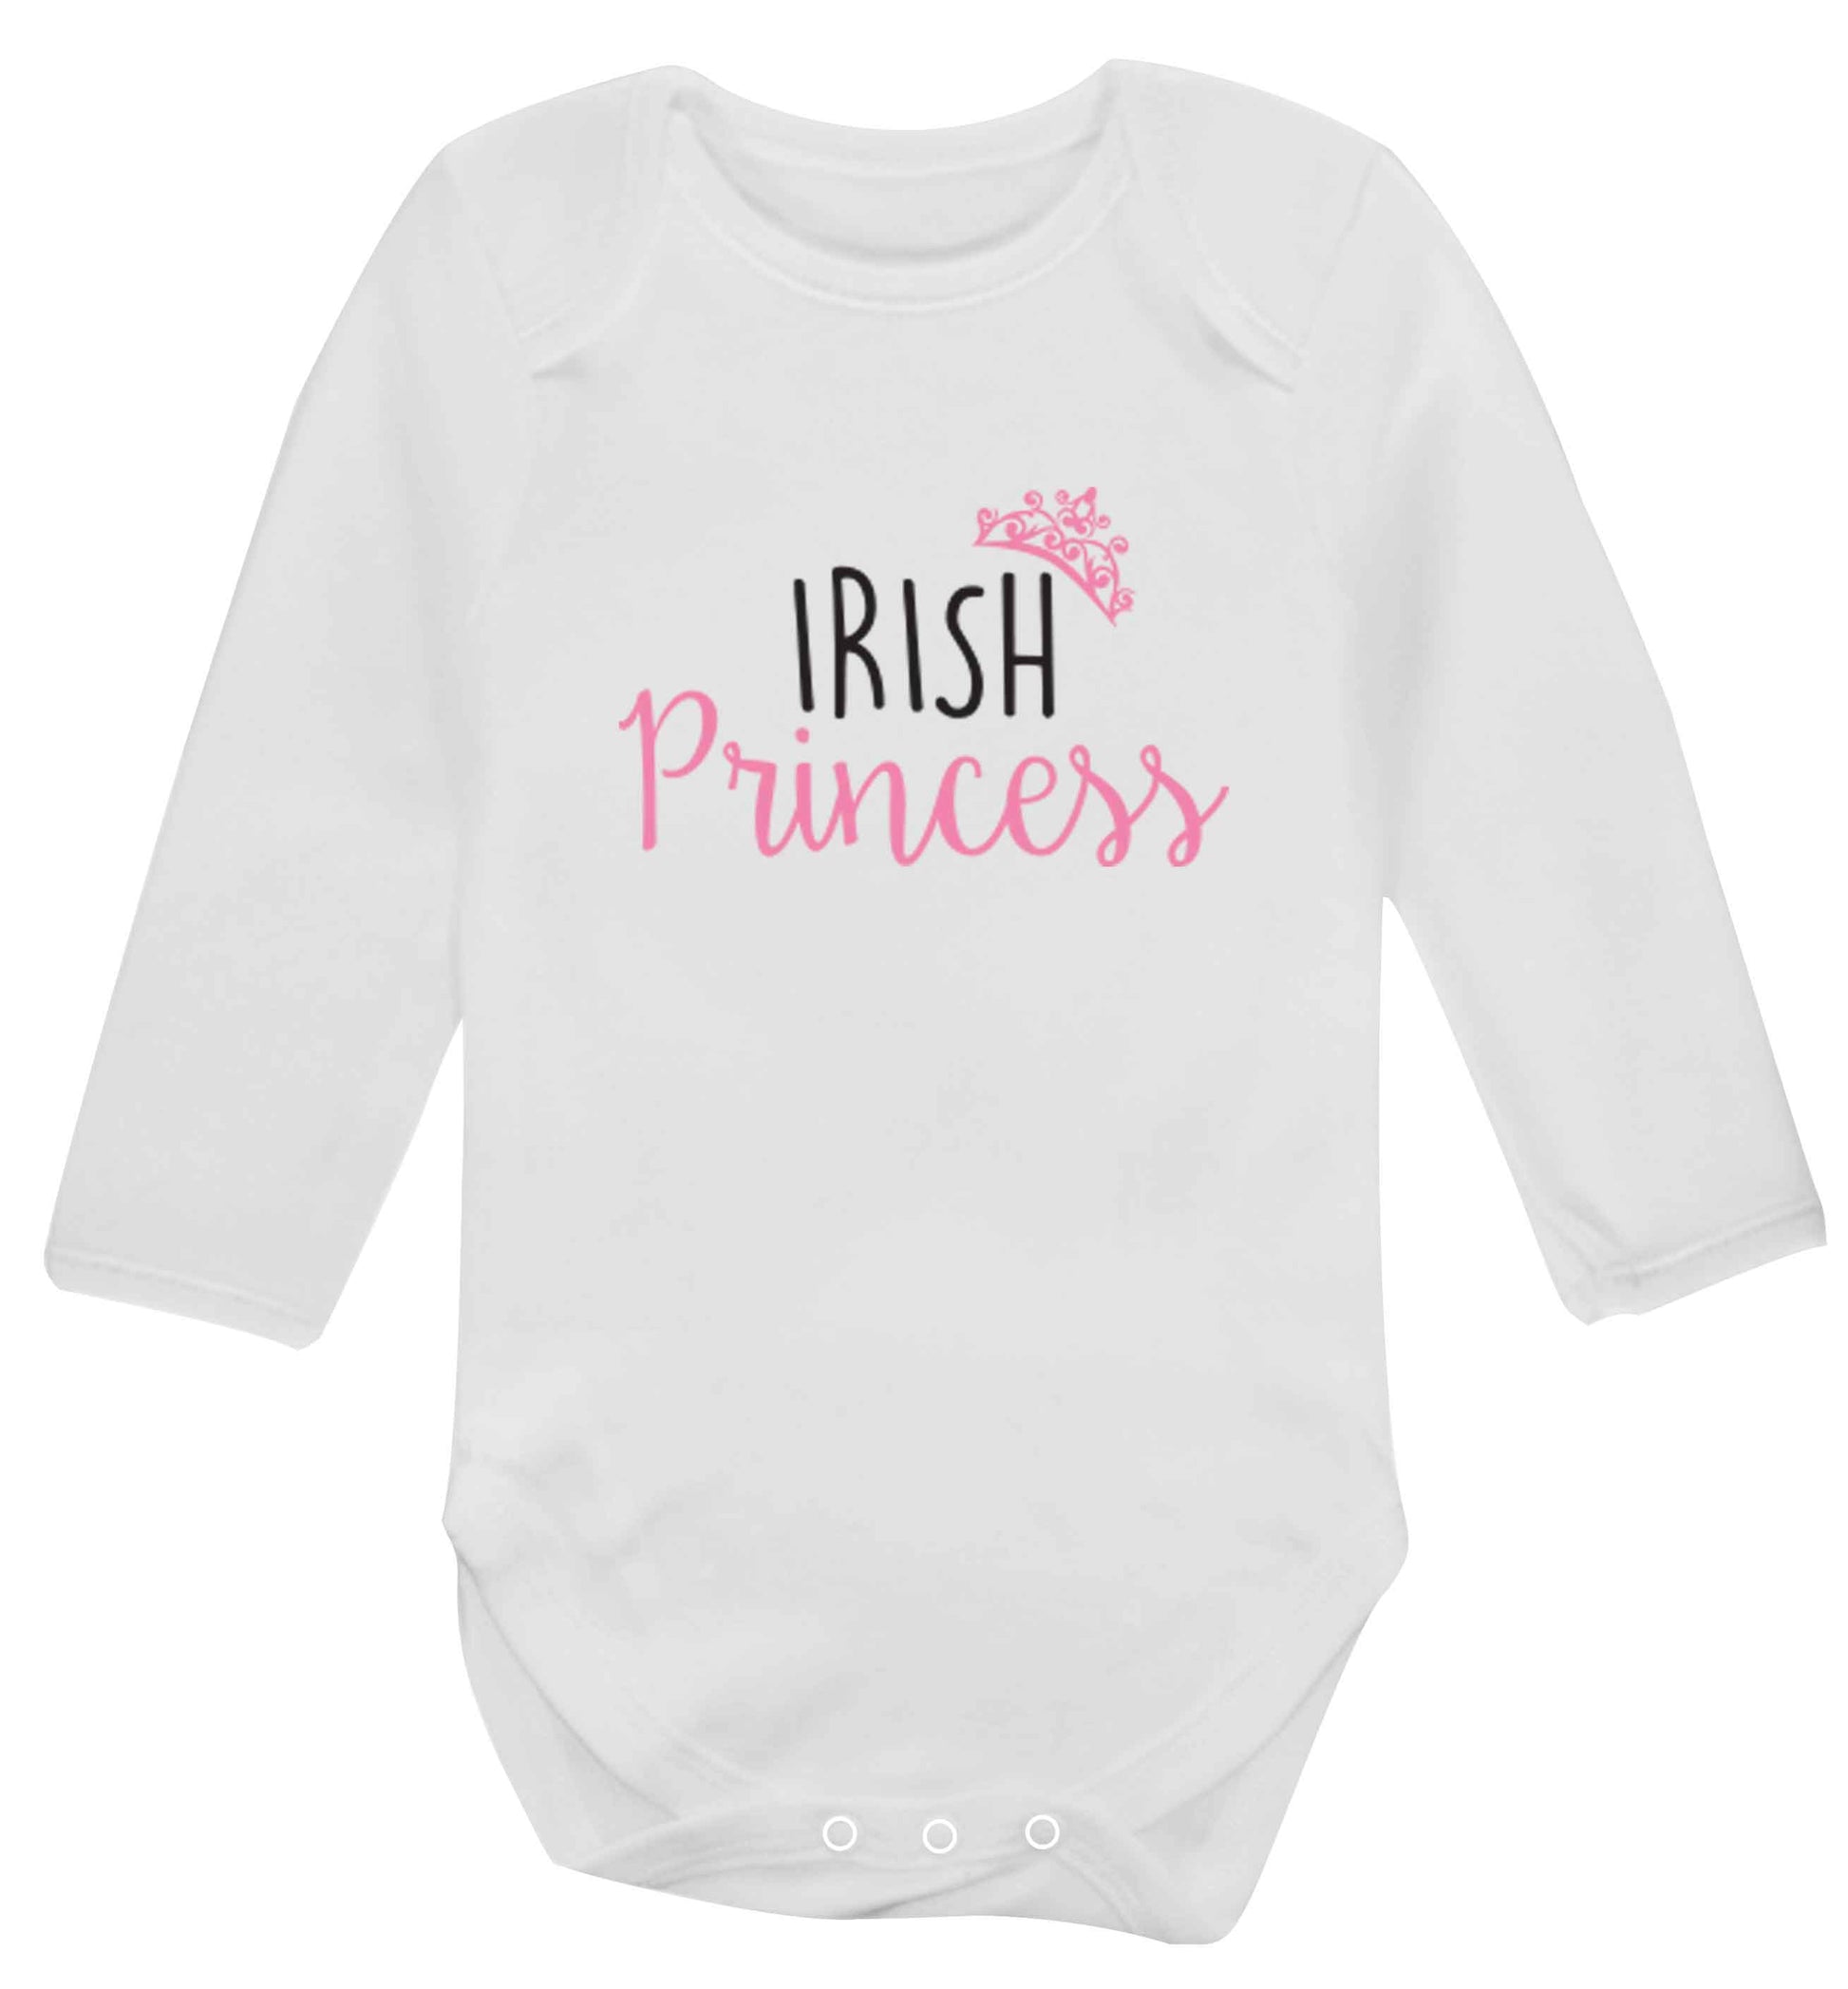 Irish princess baby vest long sleeved white 6-12 months